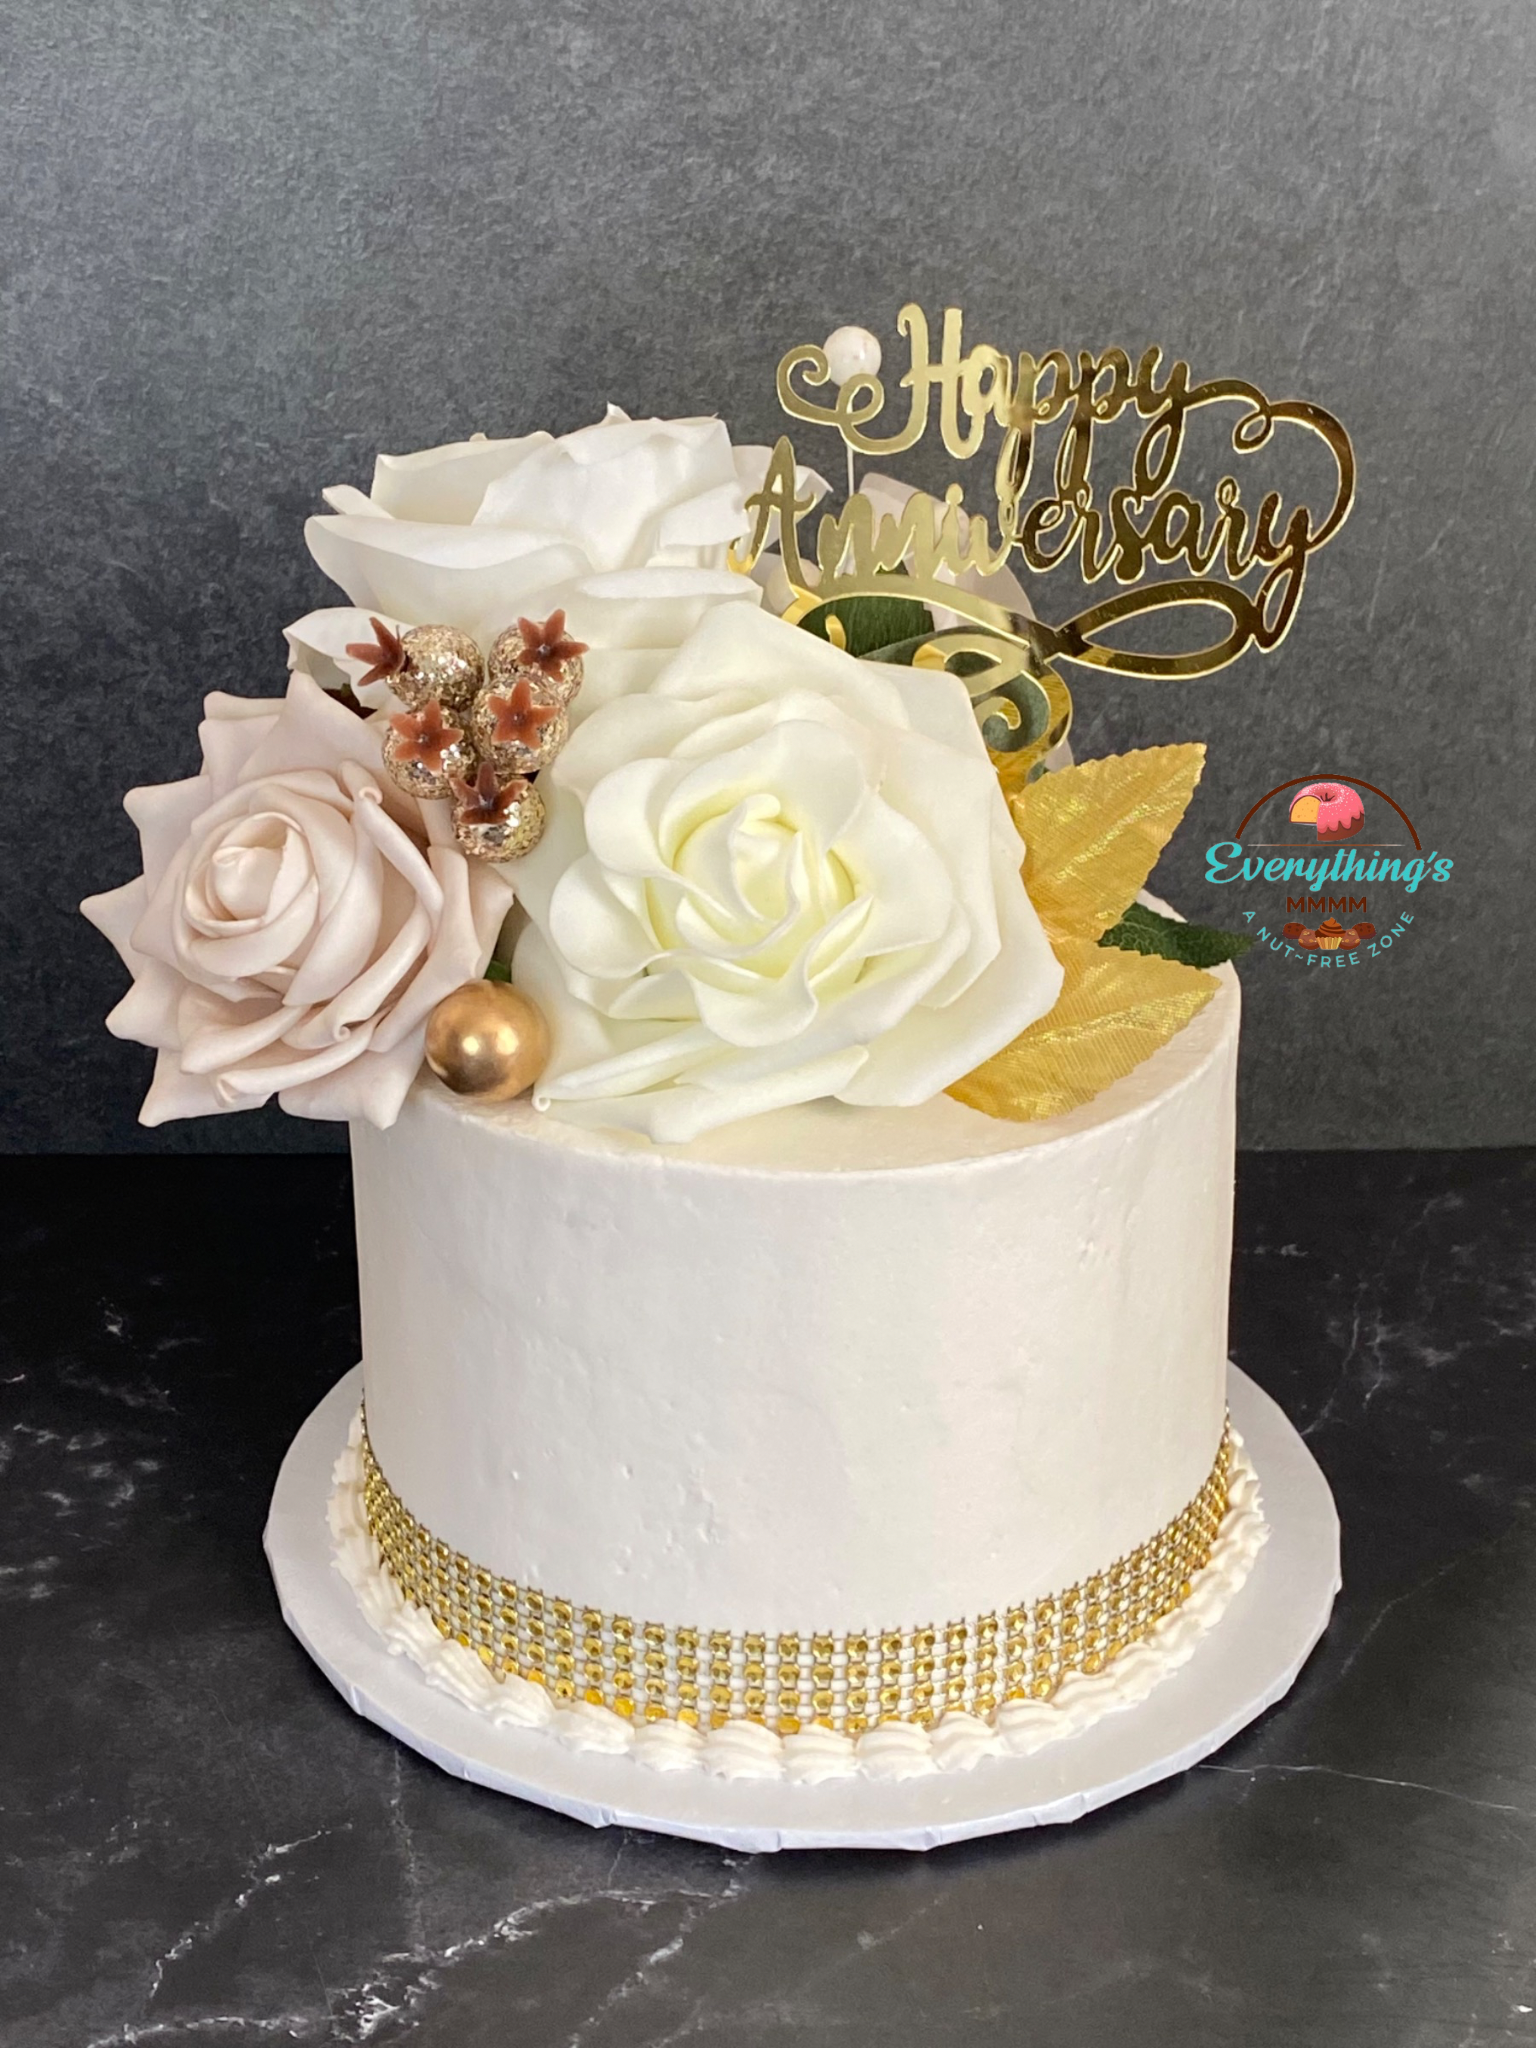 Floral Elegant anniversary cake. Gold, white